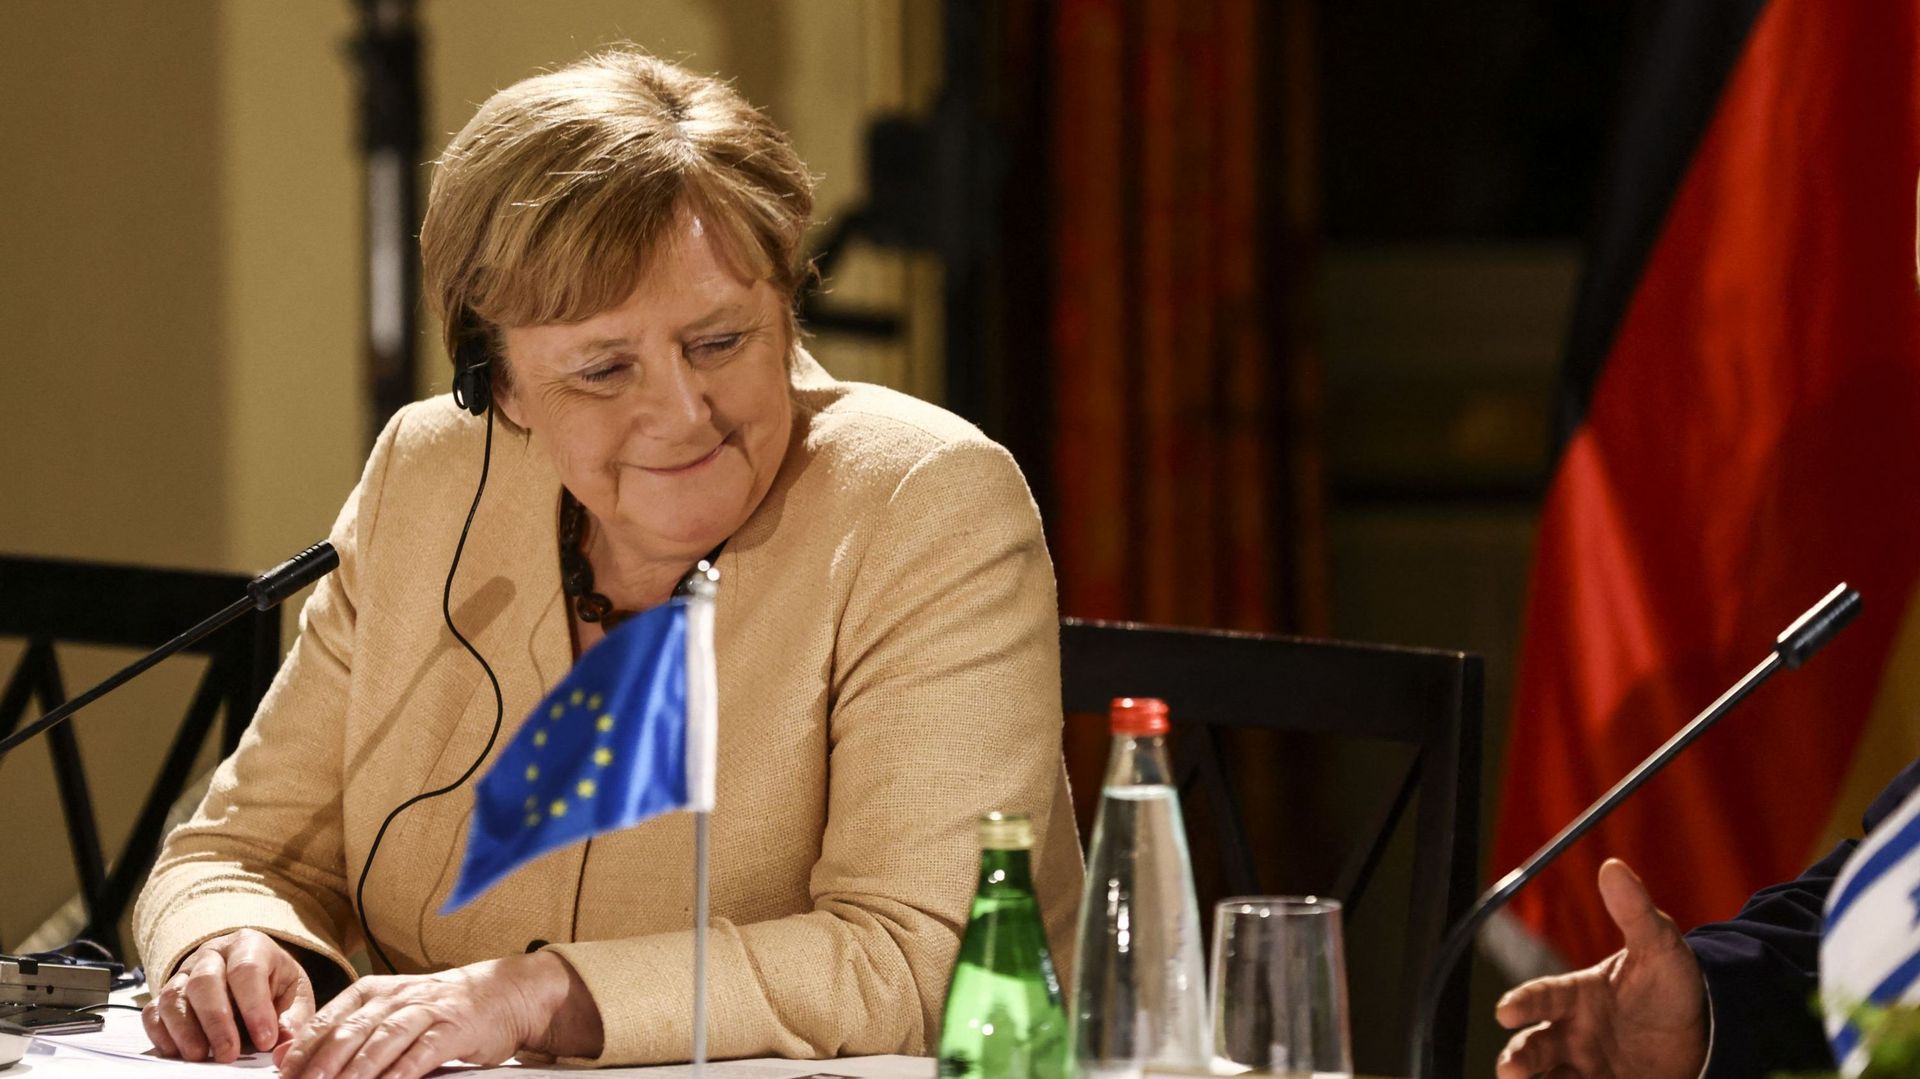 Angela Merkel recevra vendredi le Grand Cordon de l’Ordre de Léopold des mains du Roi